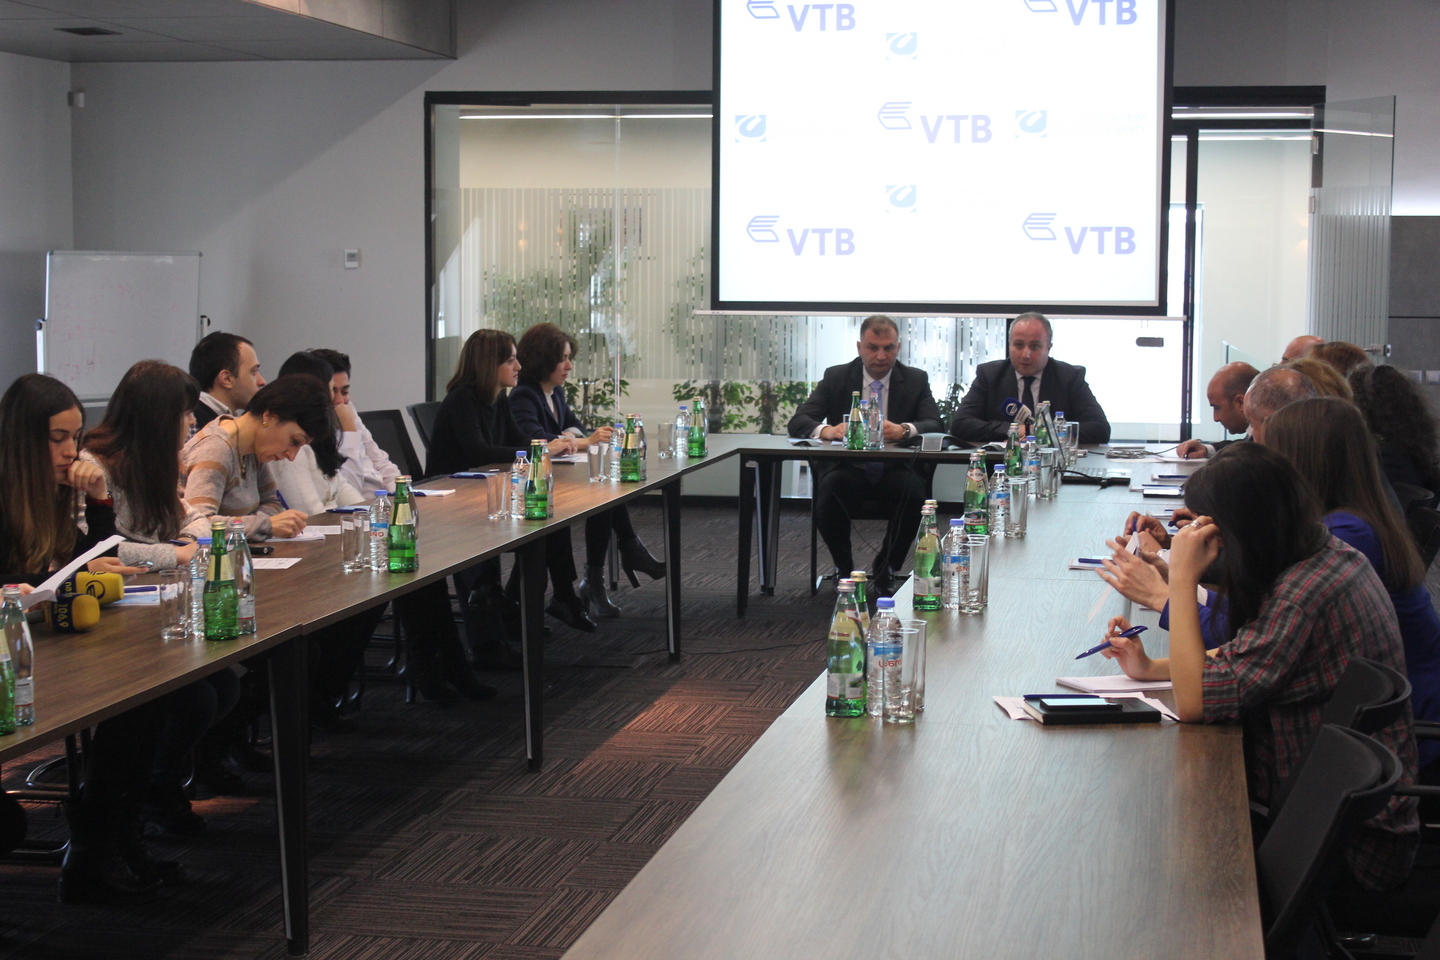 VTB ბანკი კავკასიის უნივერსიტეტის სტრატეგიული პარტნიორი გახდა